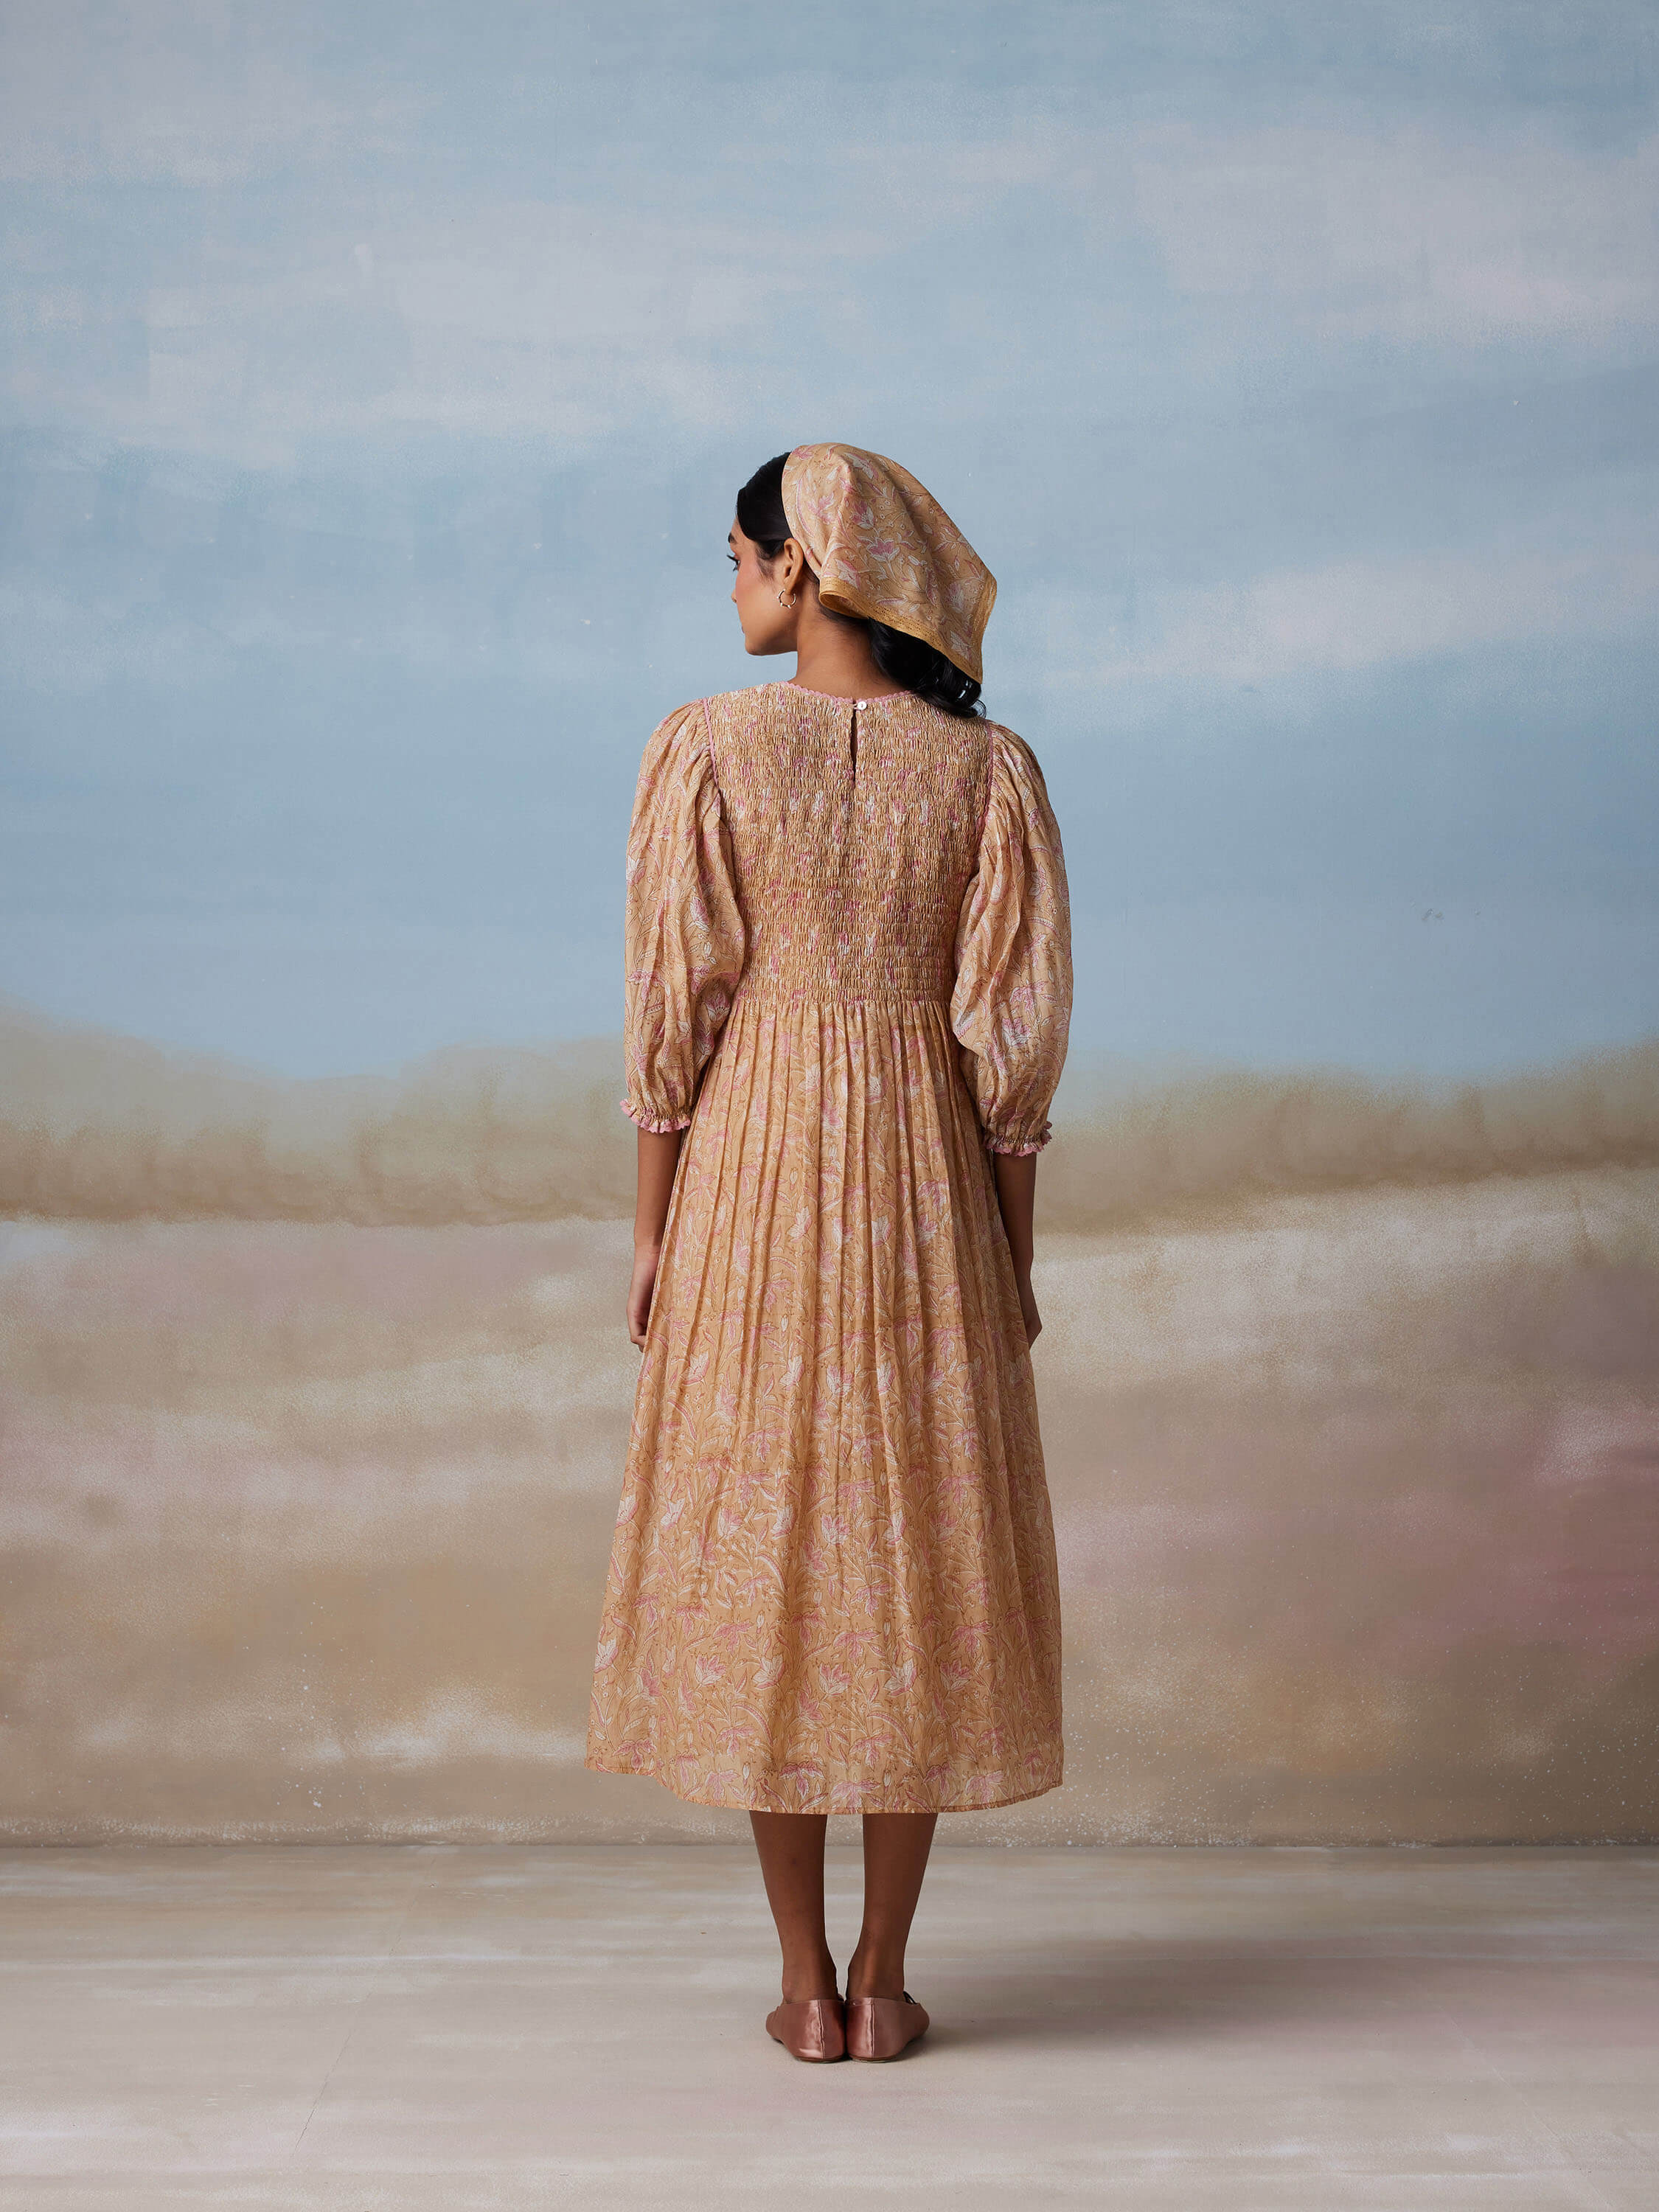 Altamira Smock Dress - Image 4